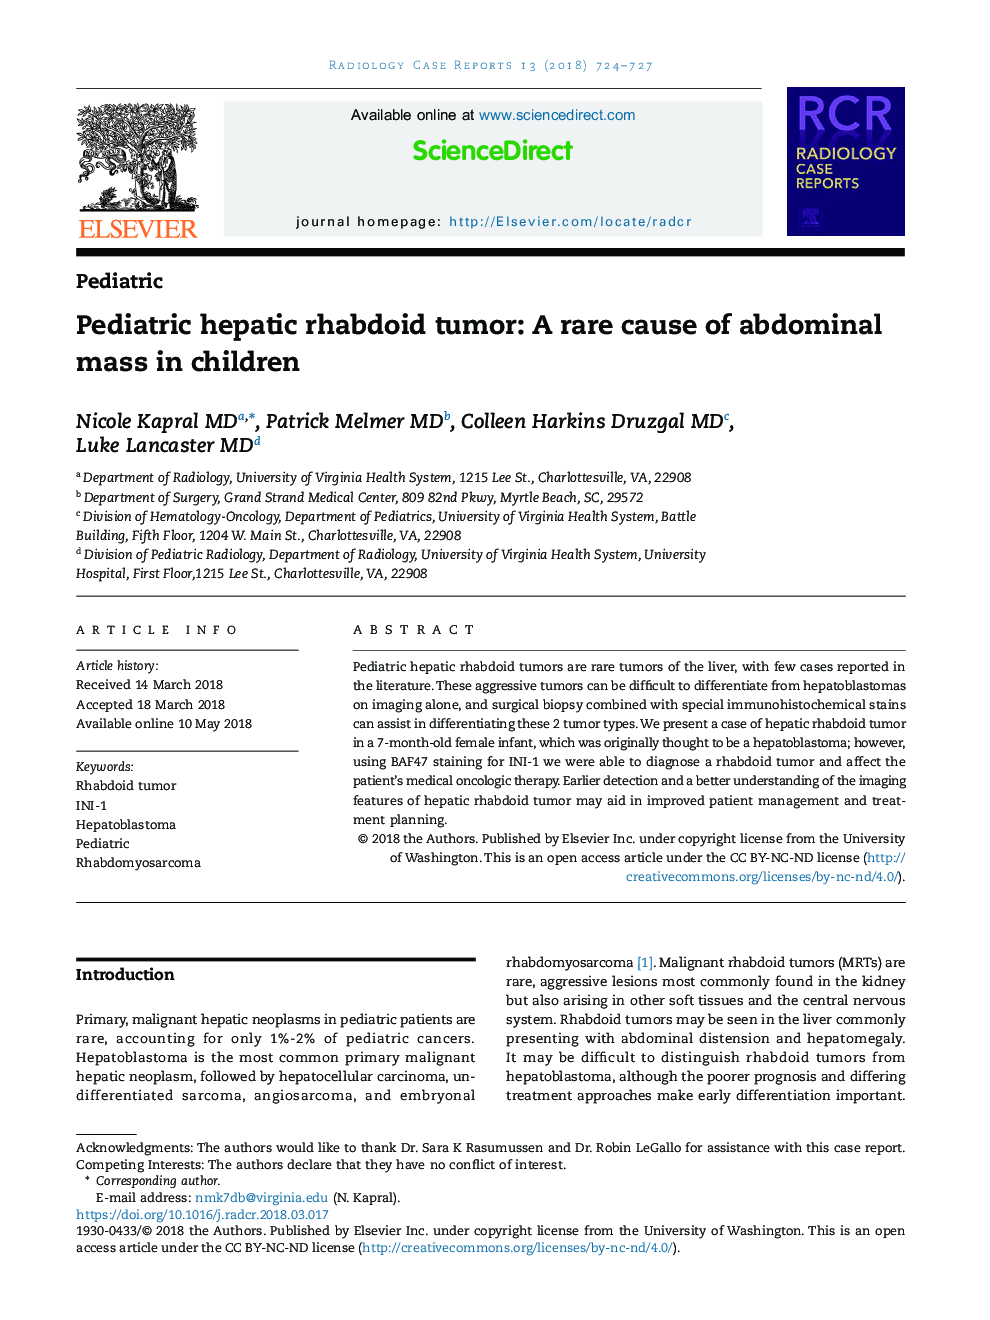 Pediatric hepatic rhabdoid tumor: A rare cause of abdominal mass in children